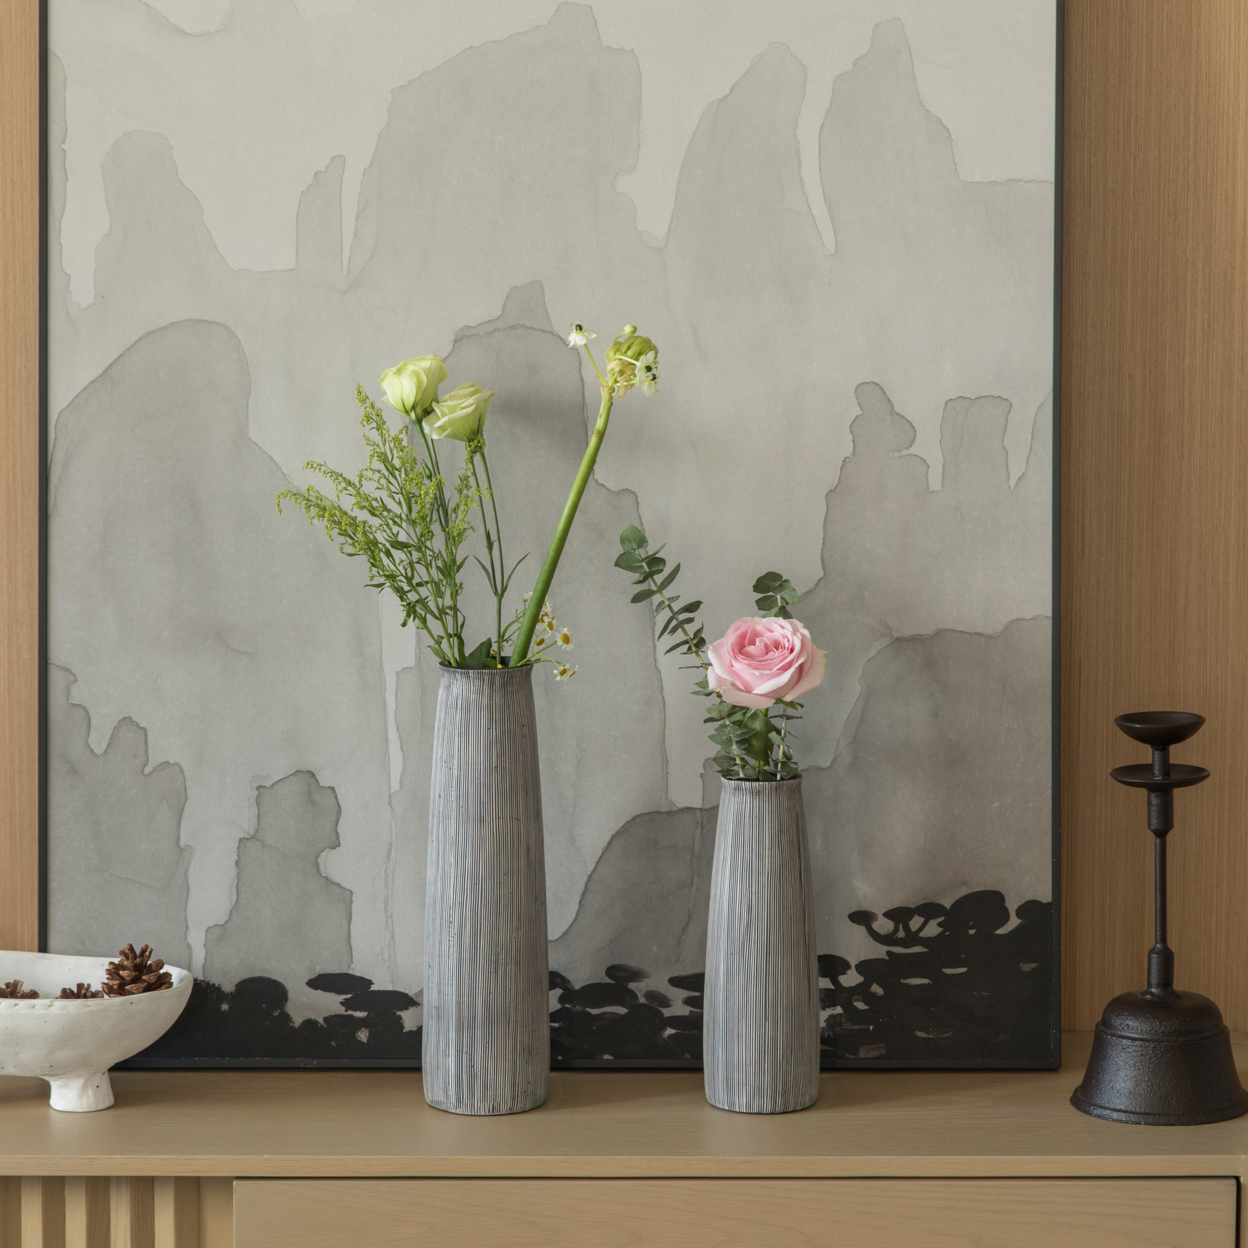 Decorative Modern Round Table Centerpiece Flower Vase With Gray Striped Design - Set Of 2